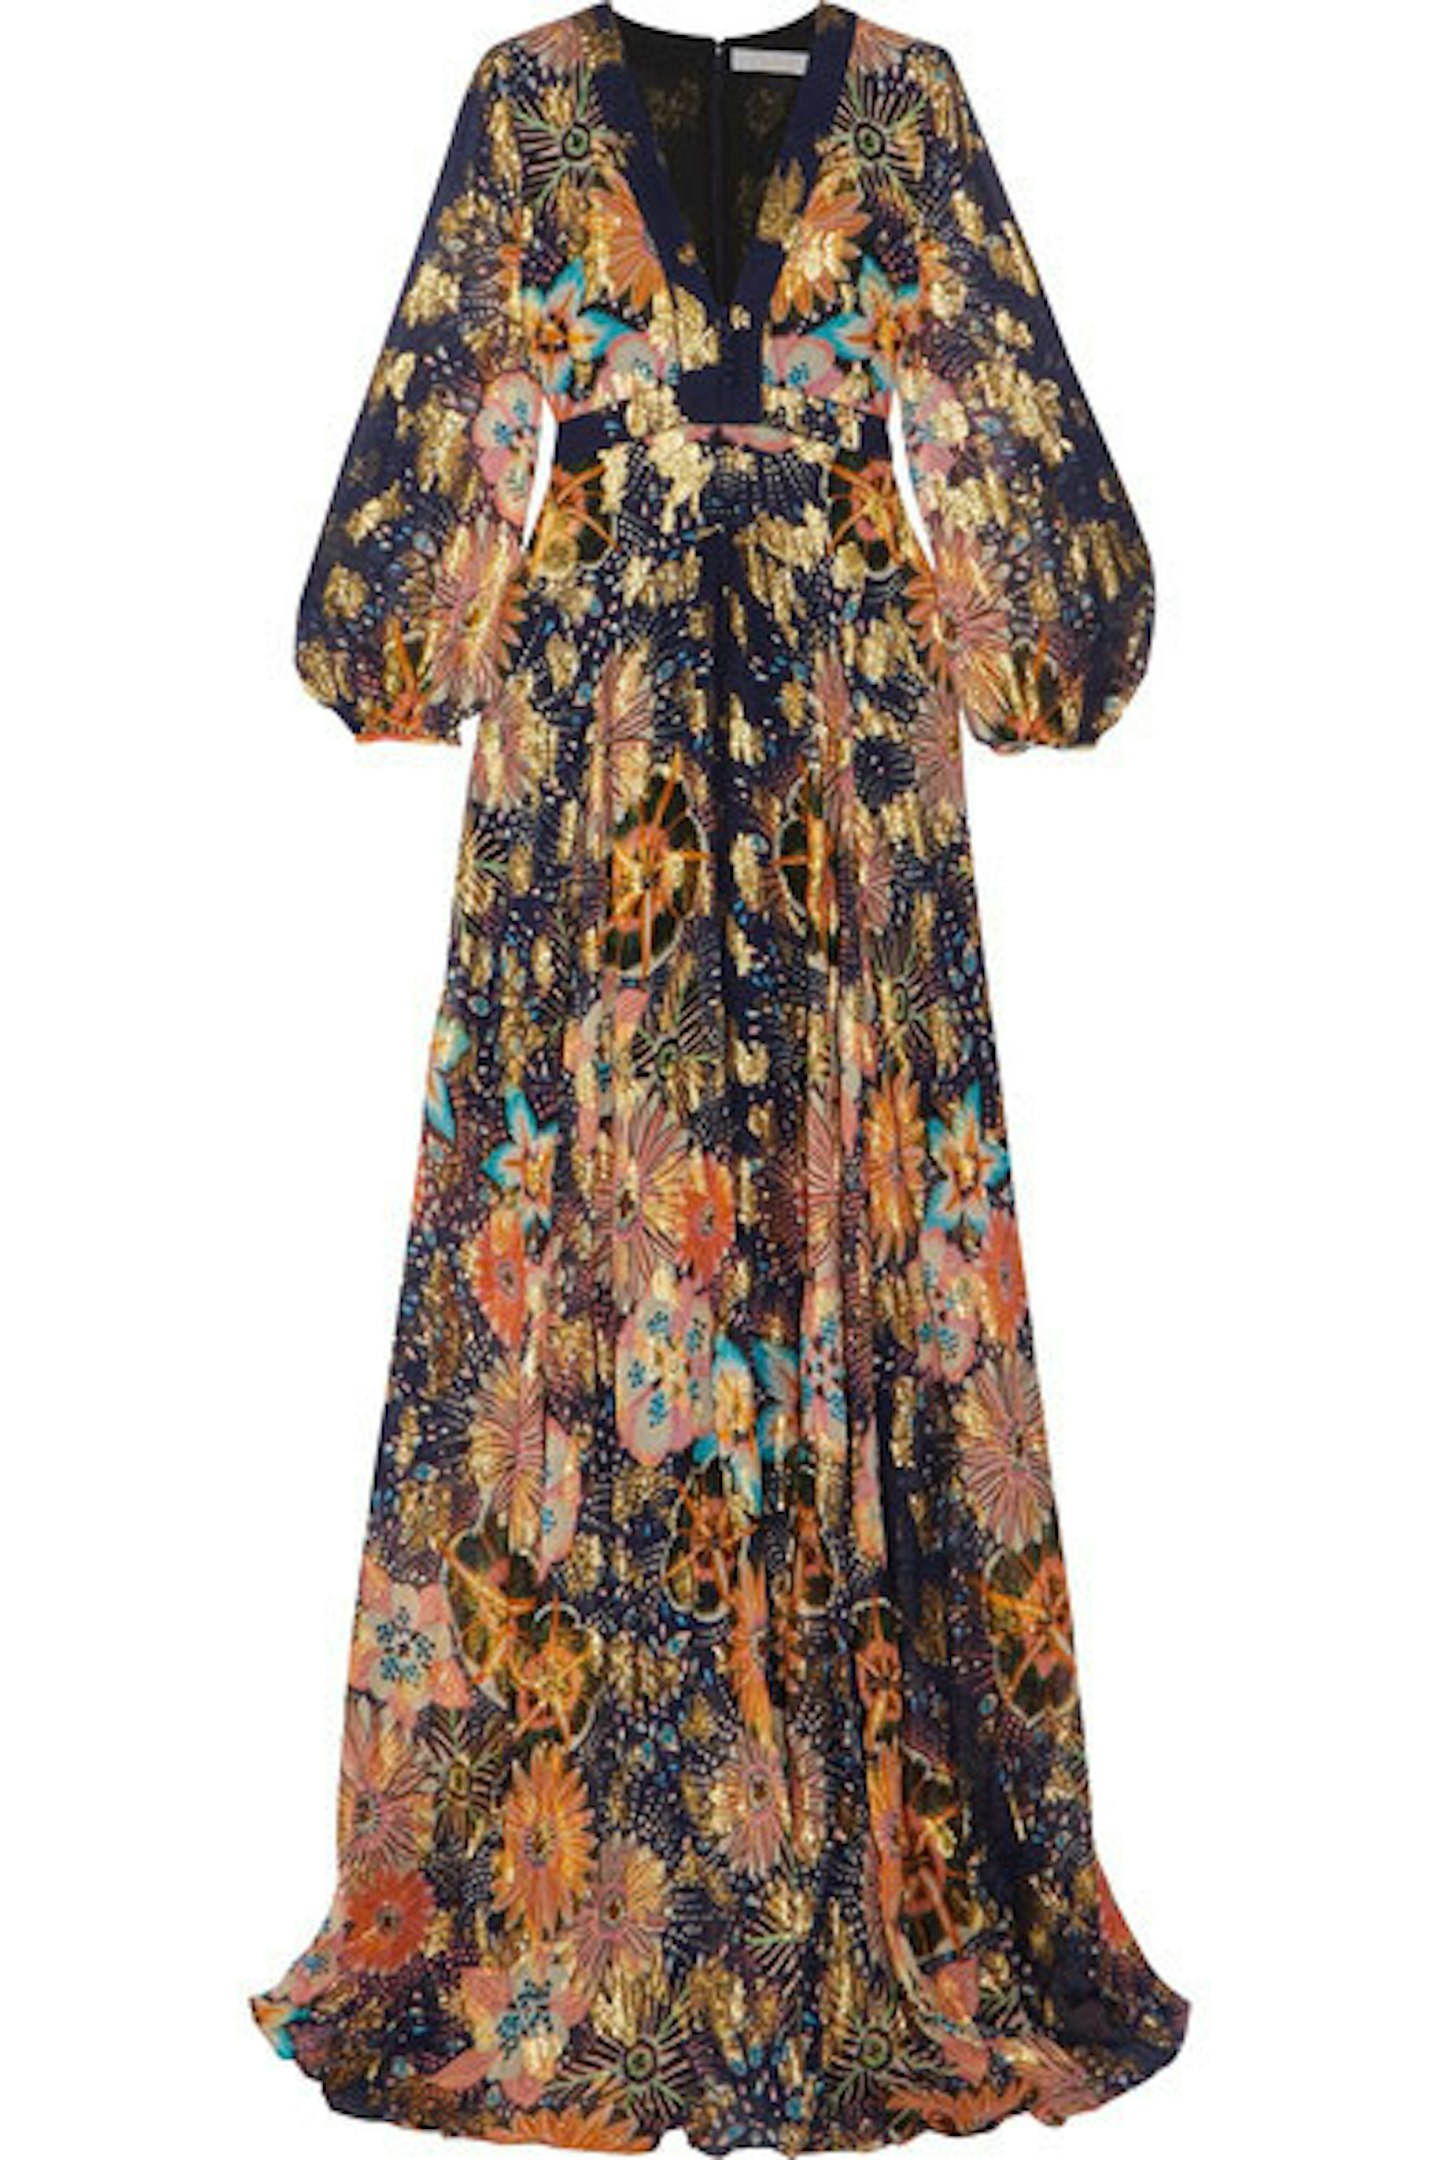 chloe floral dress